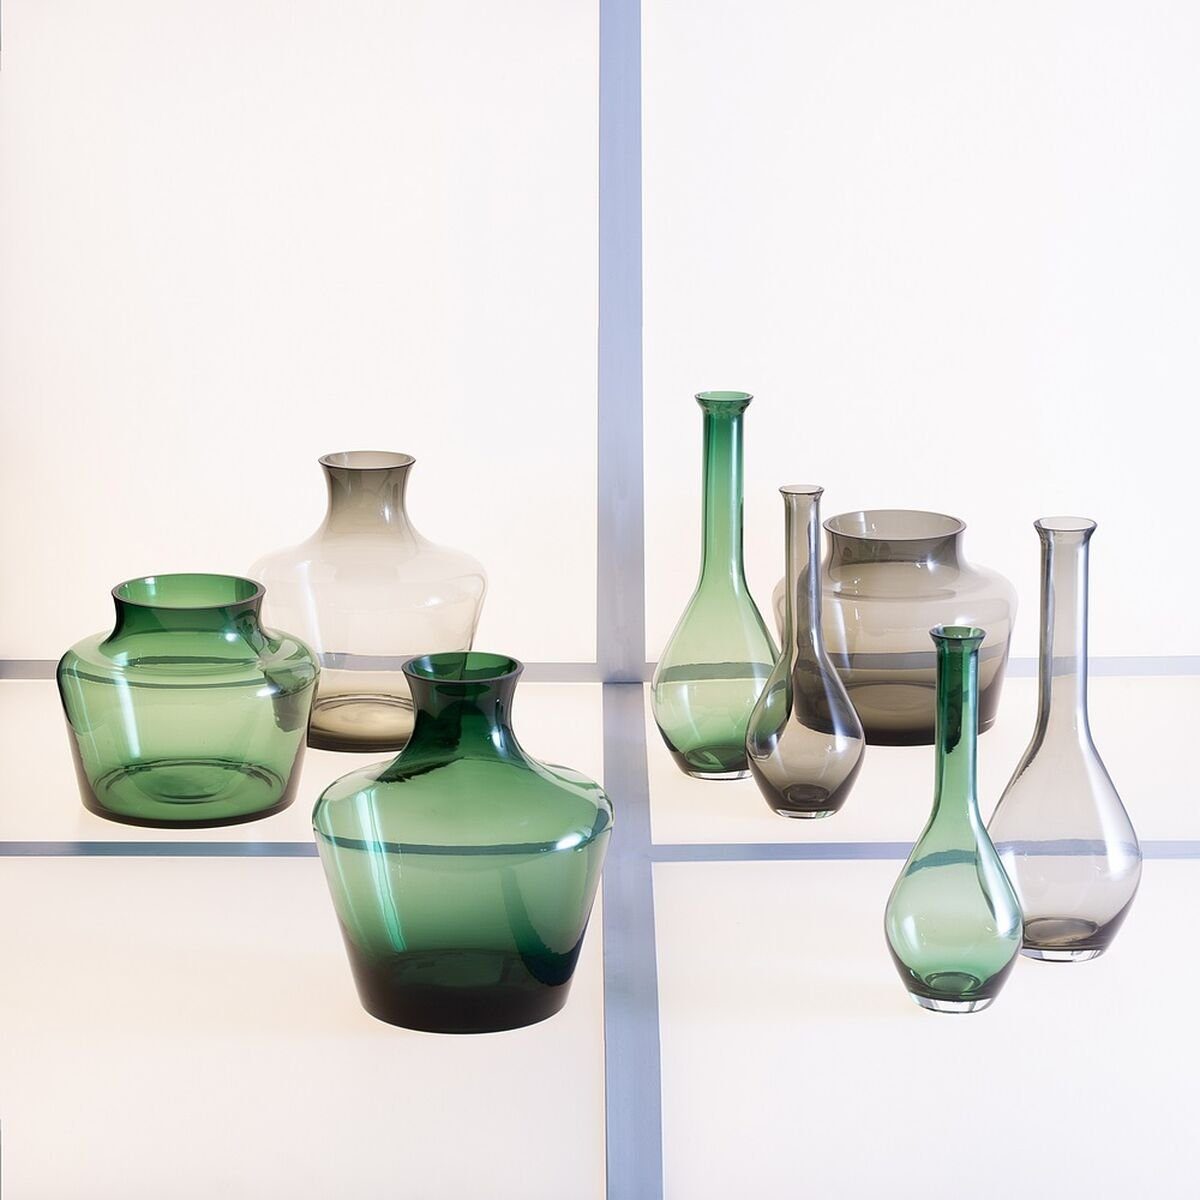 Glas x x cm Bigbuy Vase 12 12 33 grün Dekovase